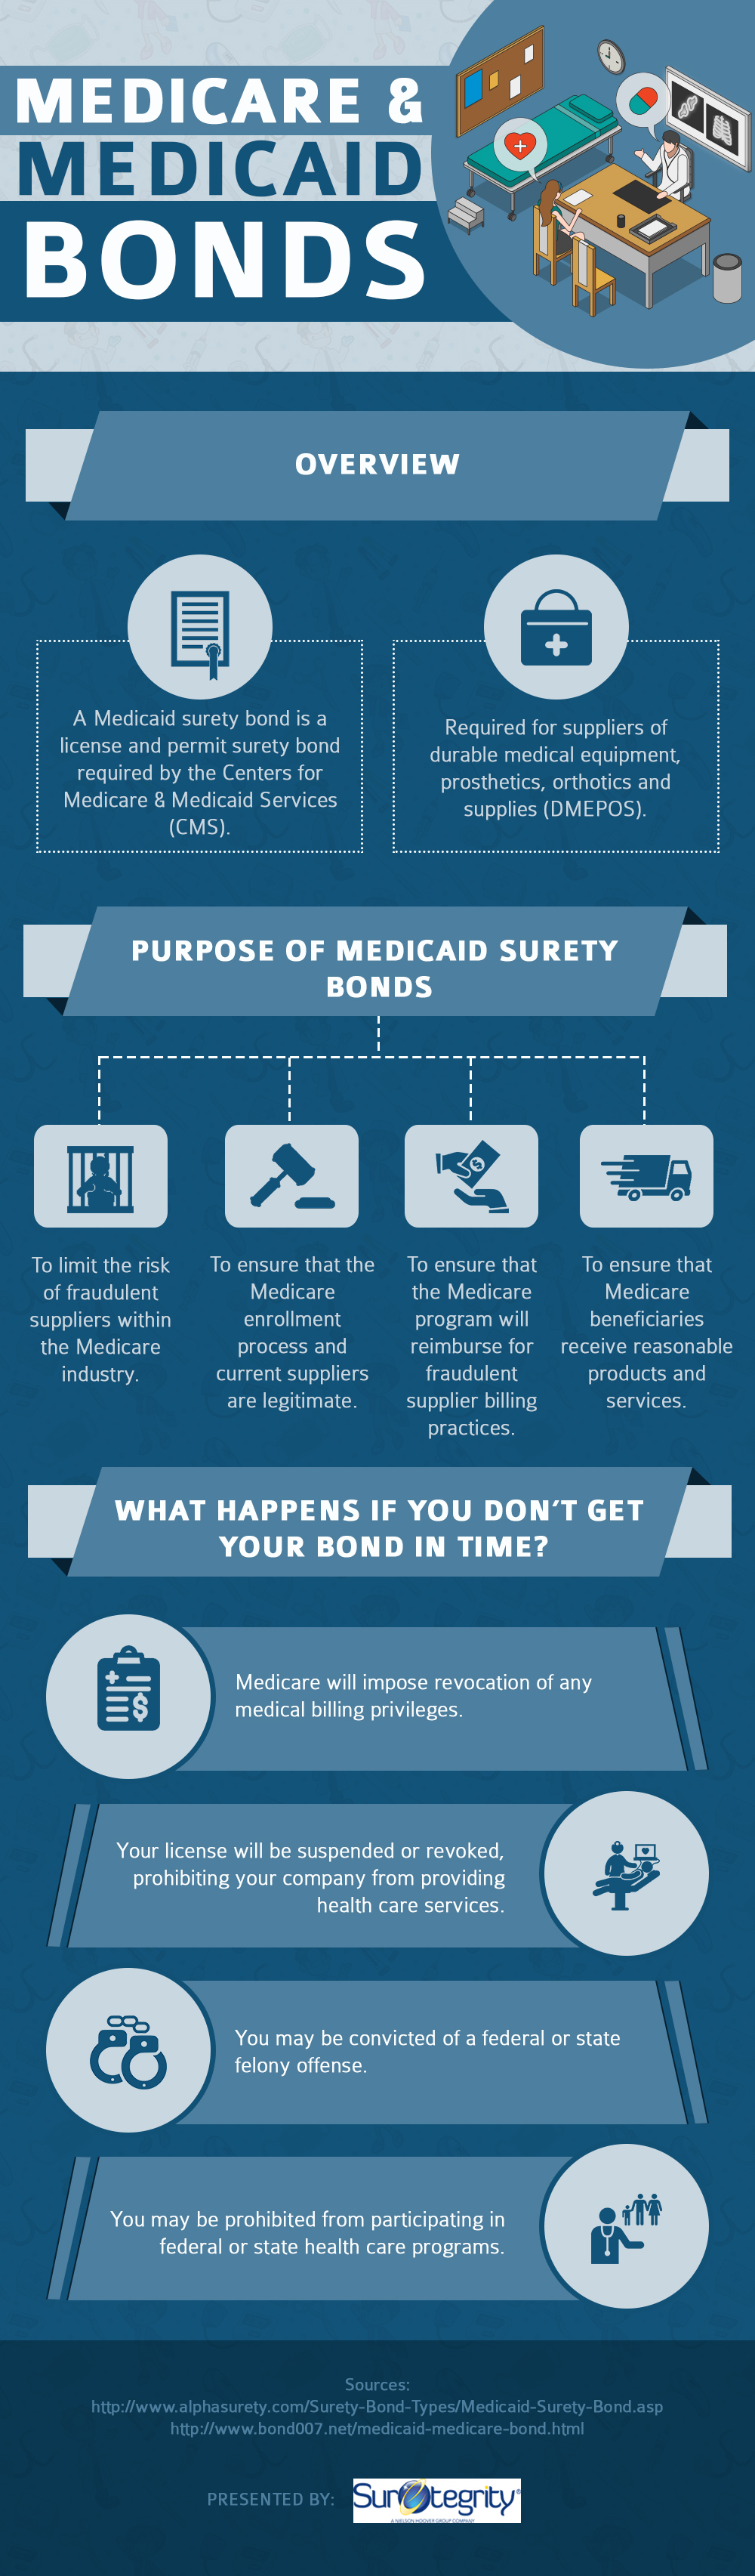 Medicare and Medicaid Bonds